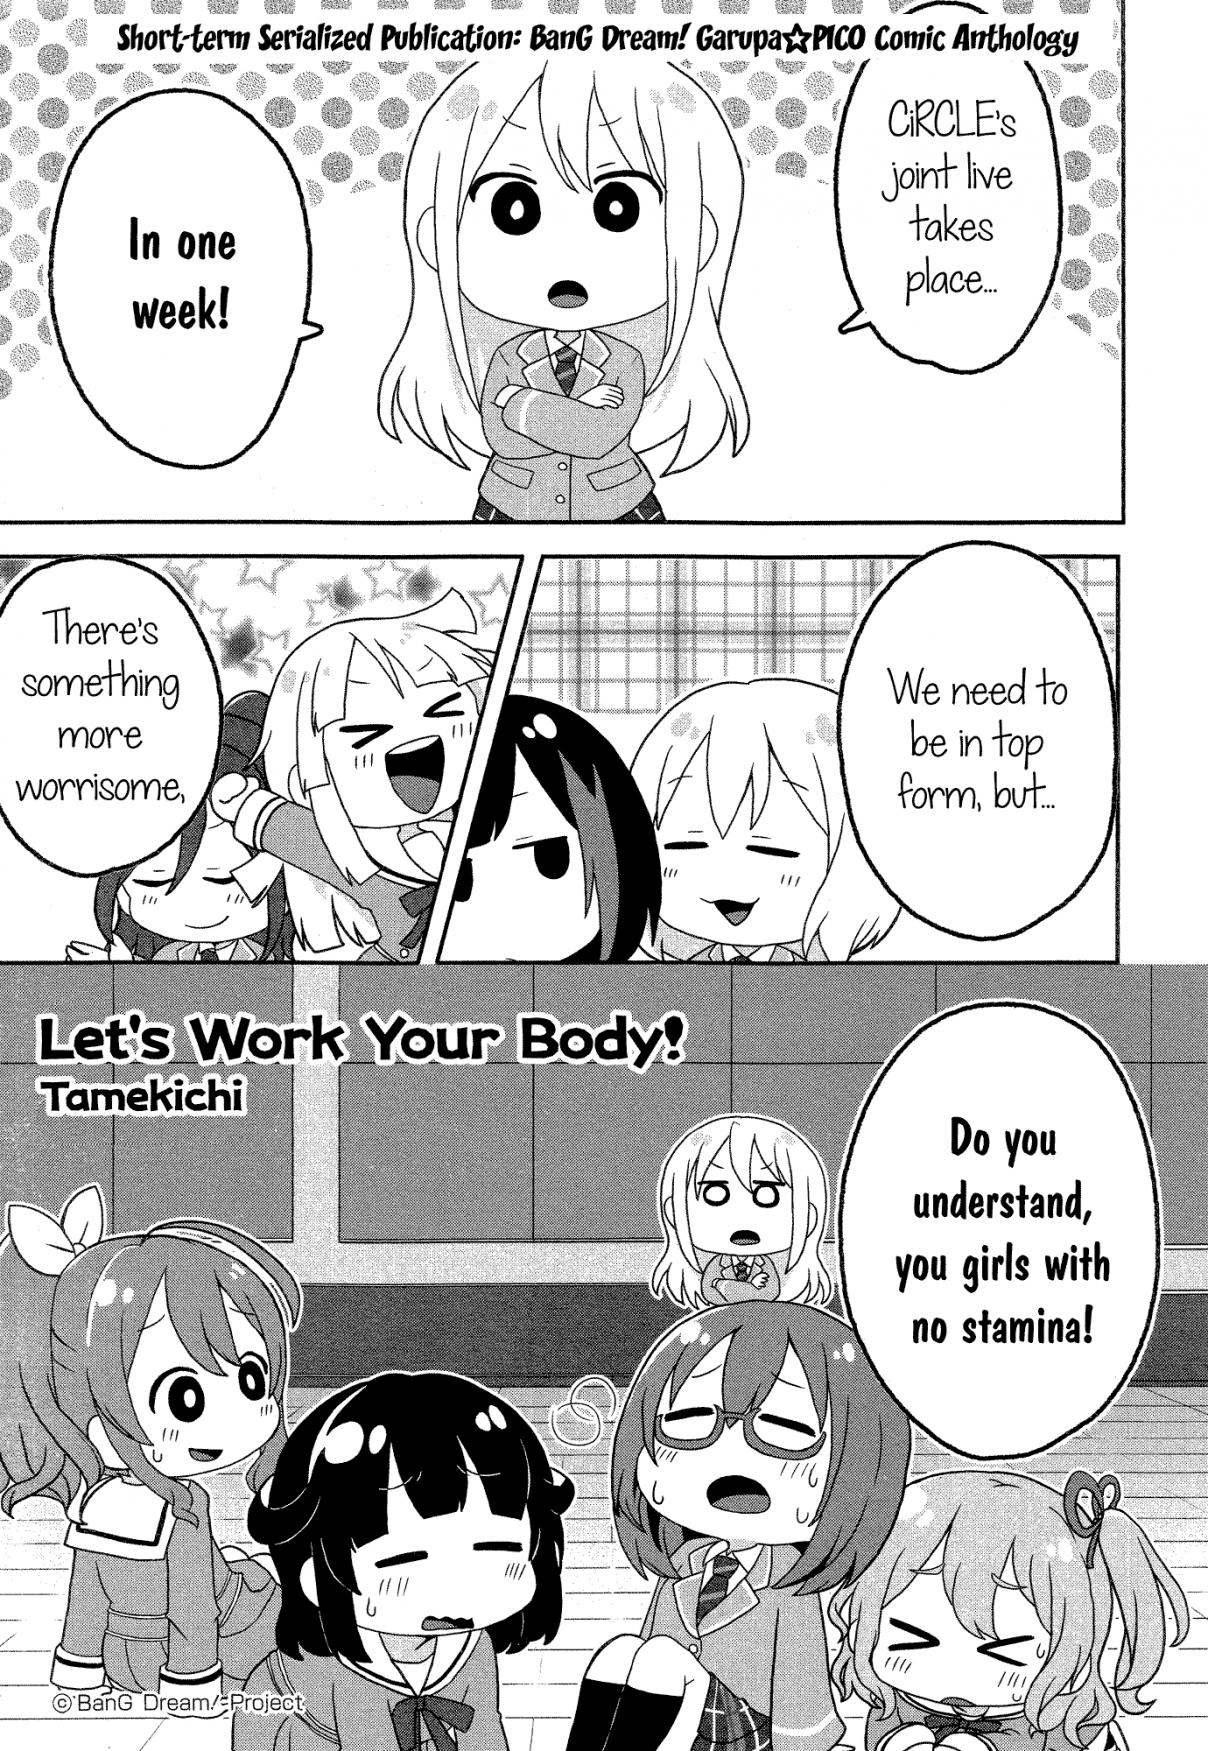 BanG Dream! Garupa☆PICO Comic Anthology Let's Work Your Body